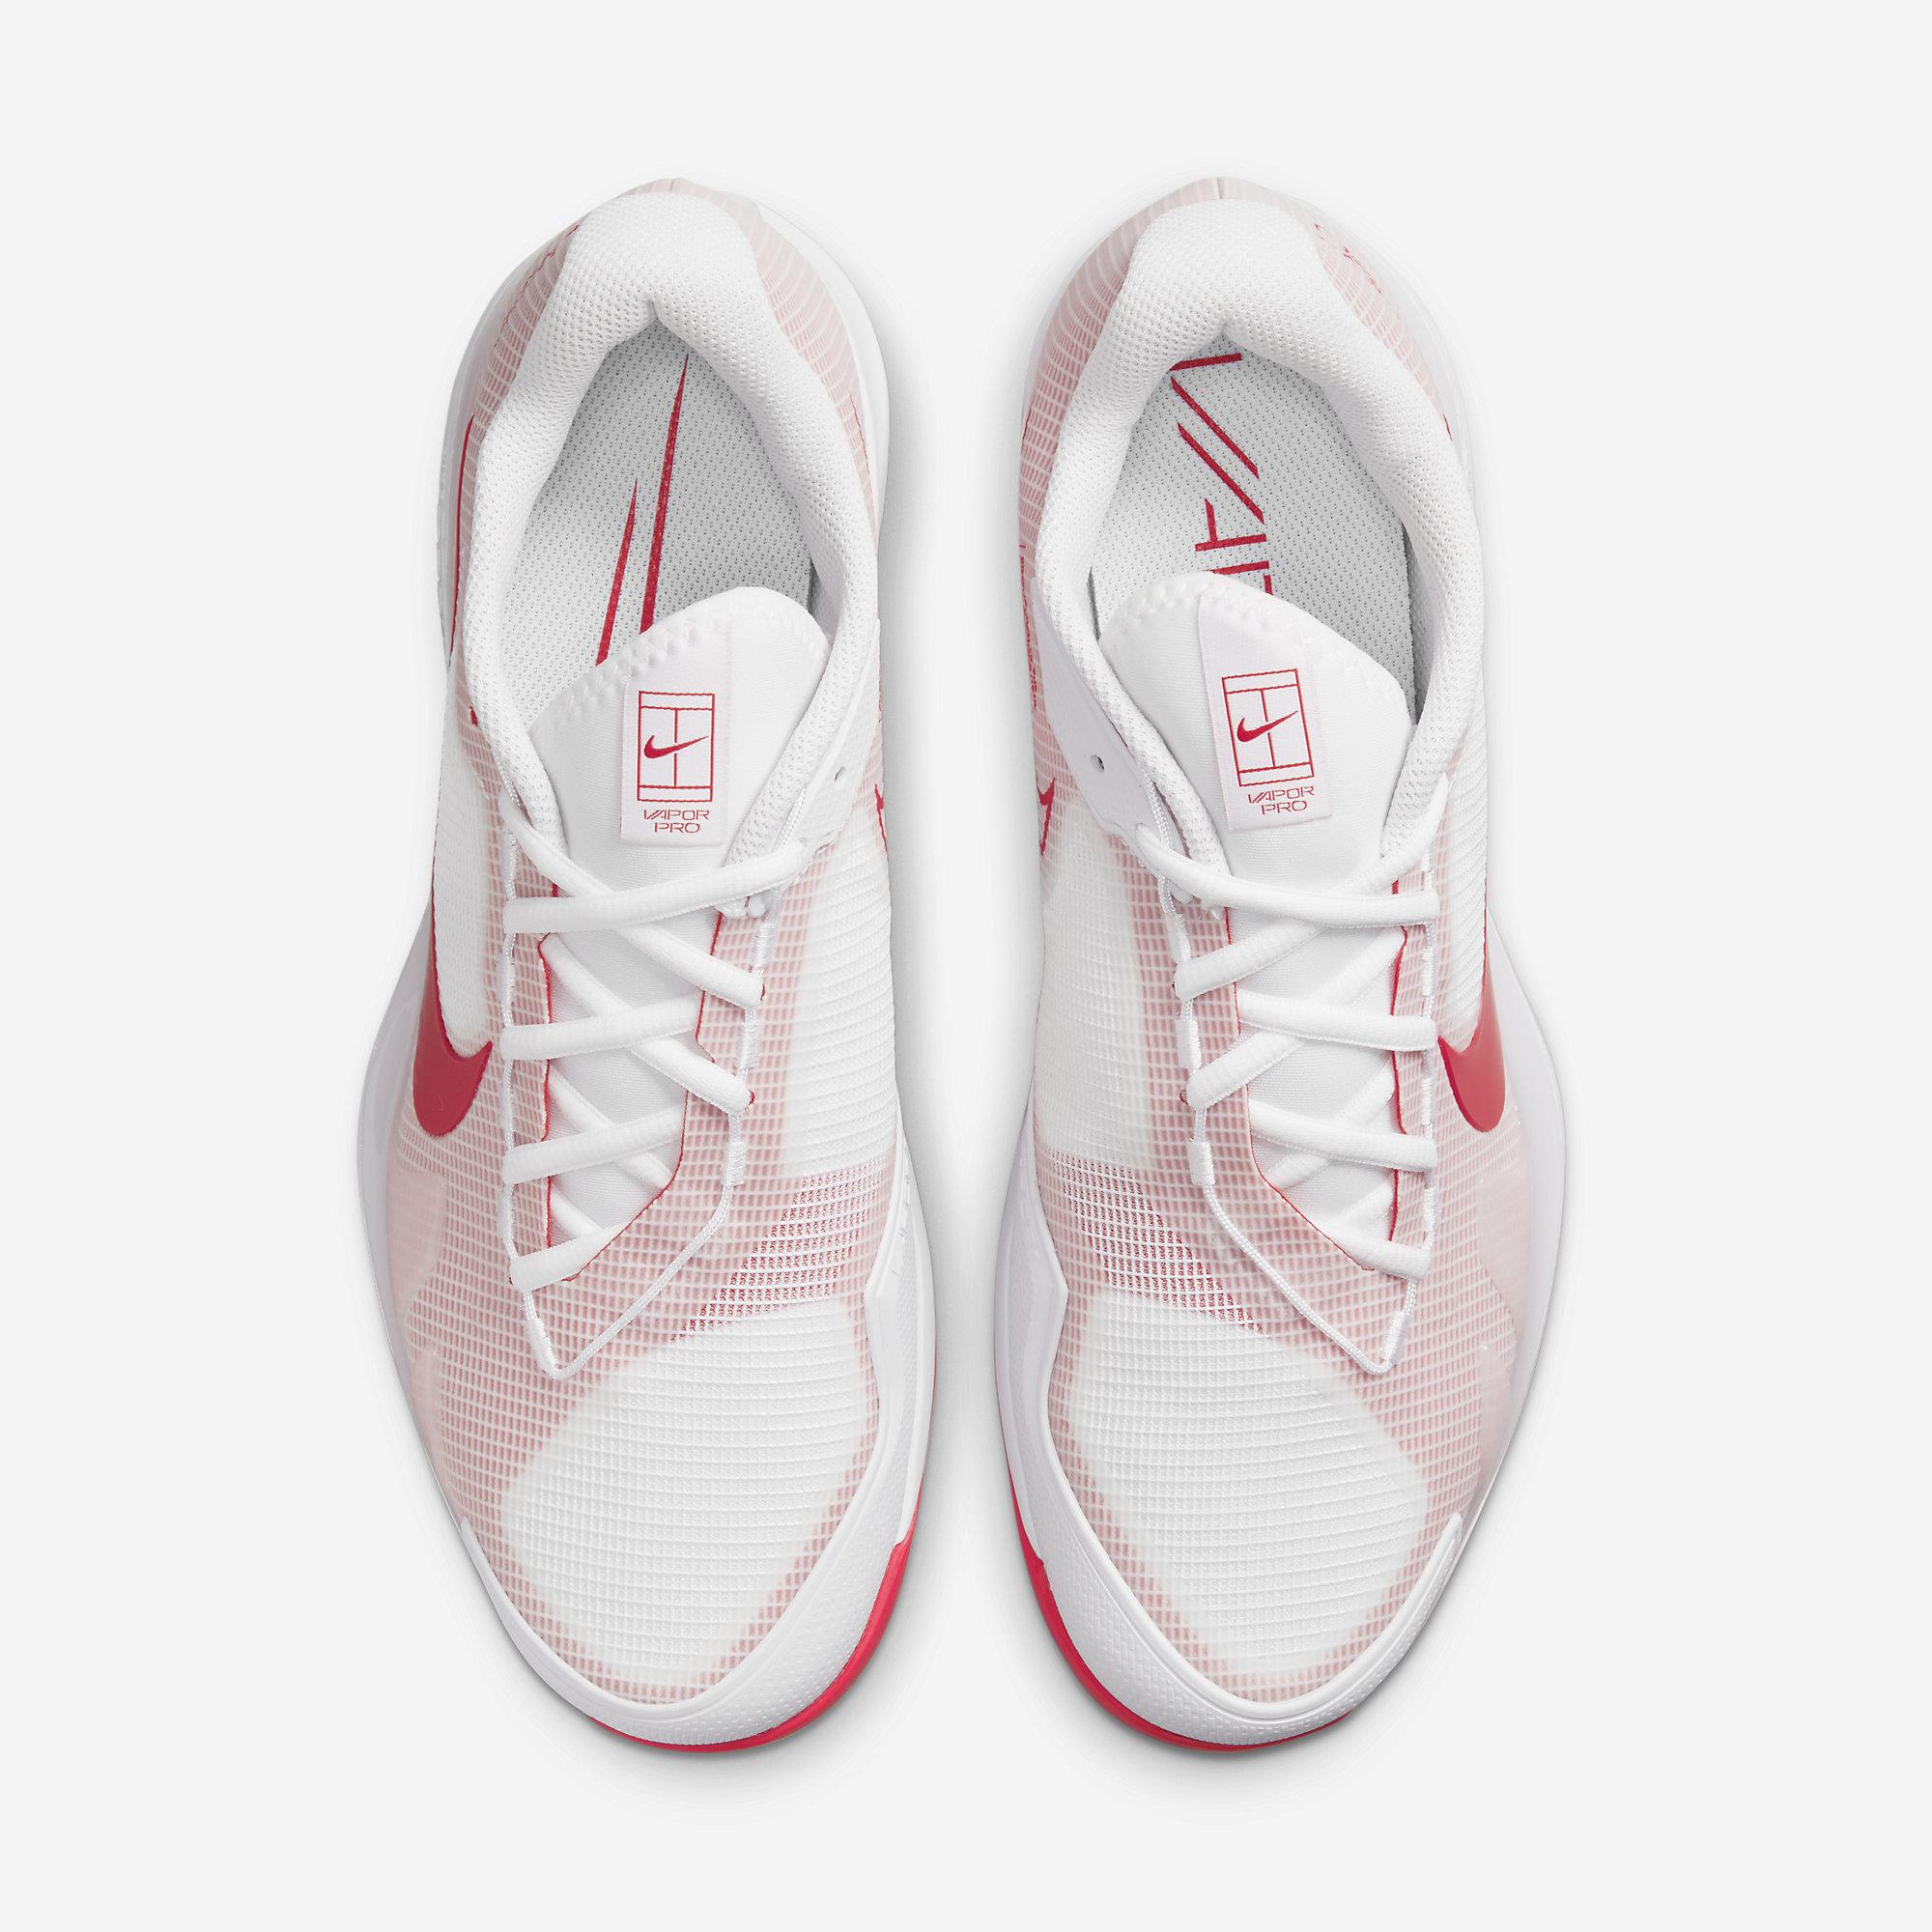 Nike Mens Air Zoom Vapor Pro Tennis Shoes - White/University Red ...